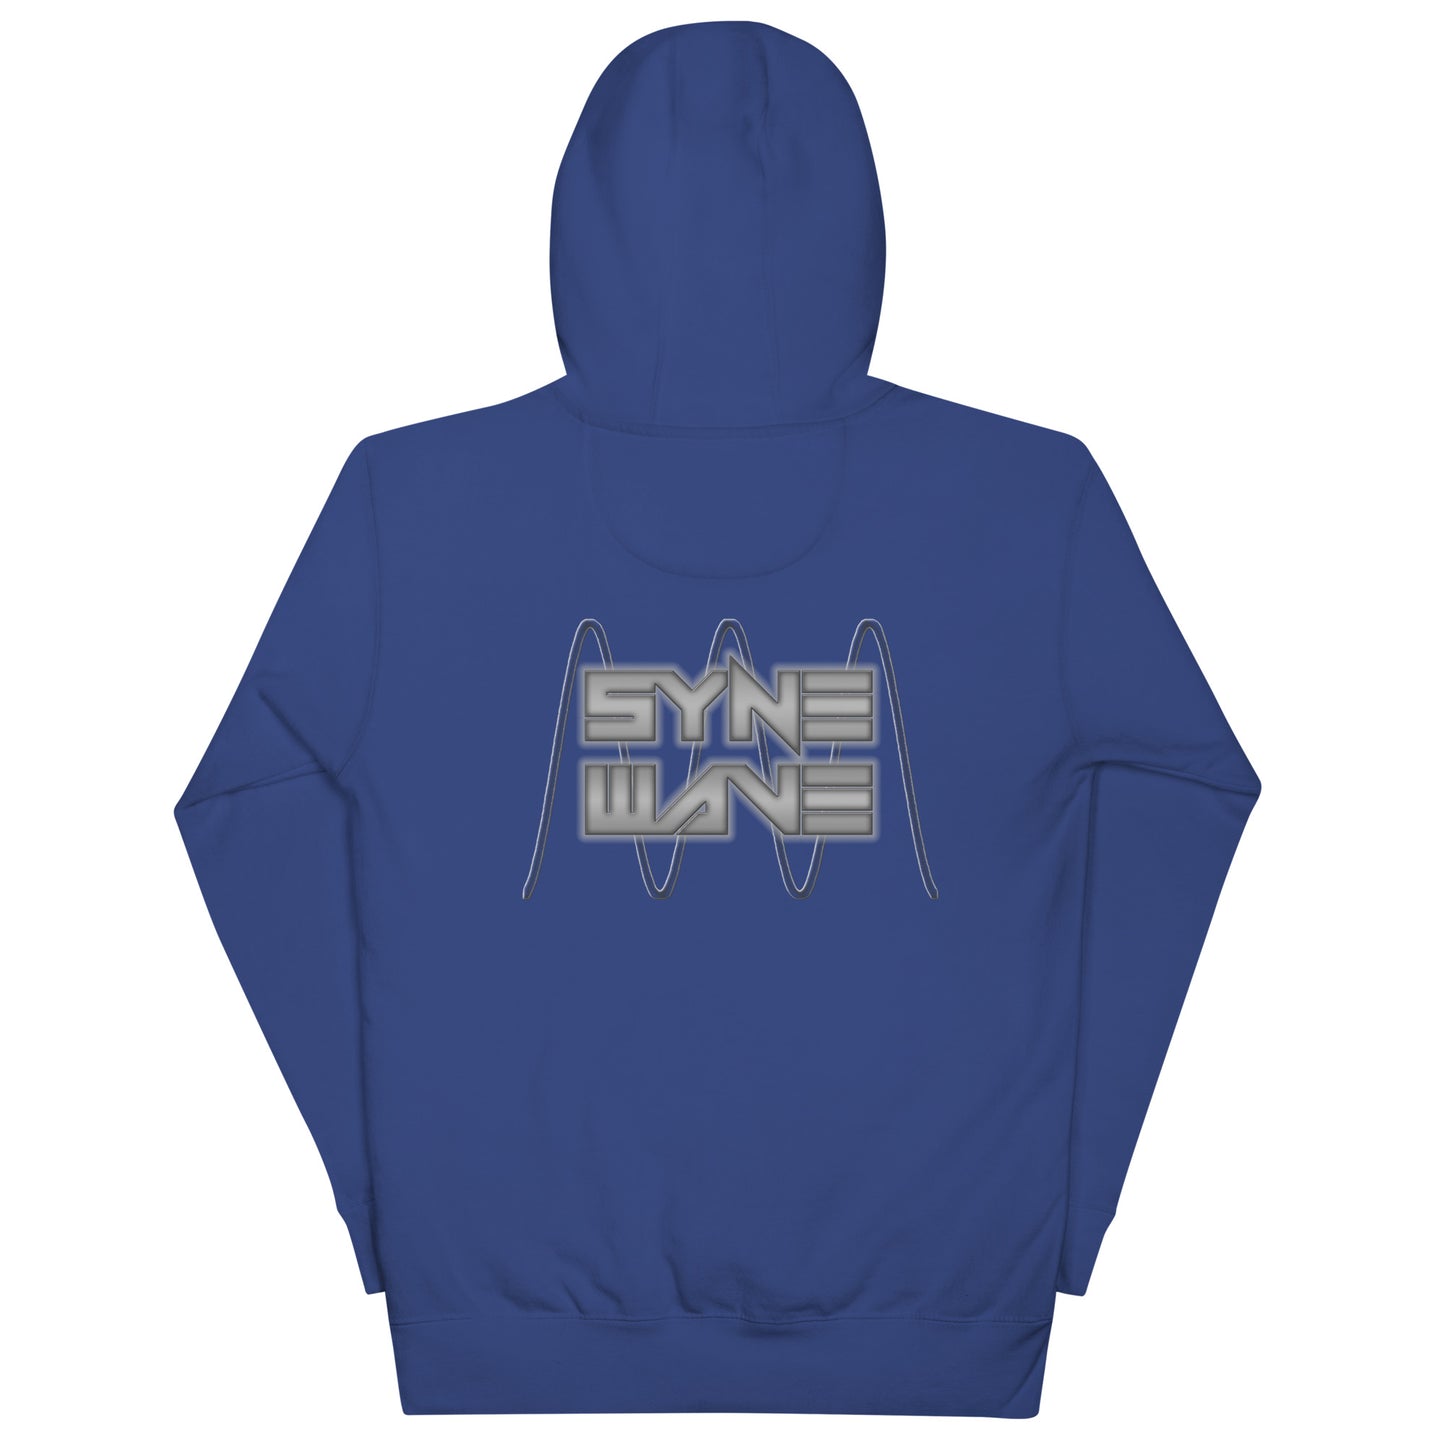 Syne Wave B+W Logo Hoodie